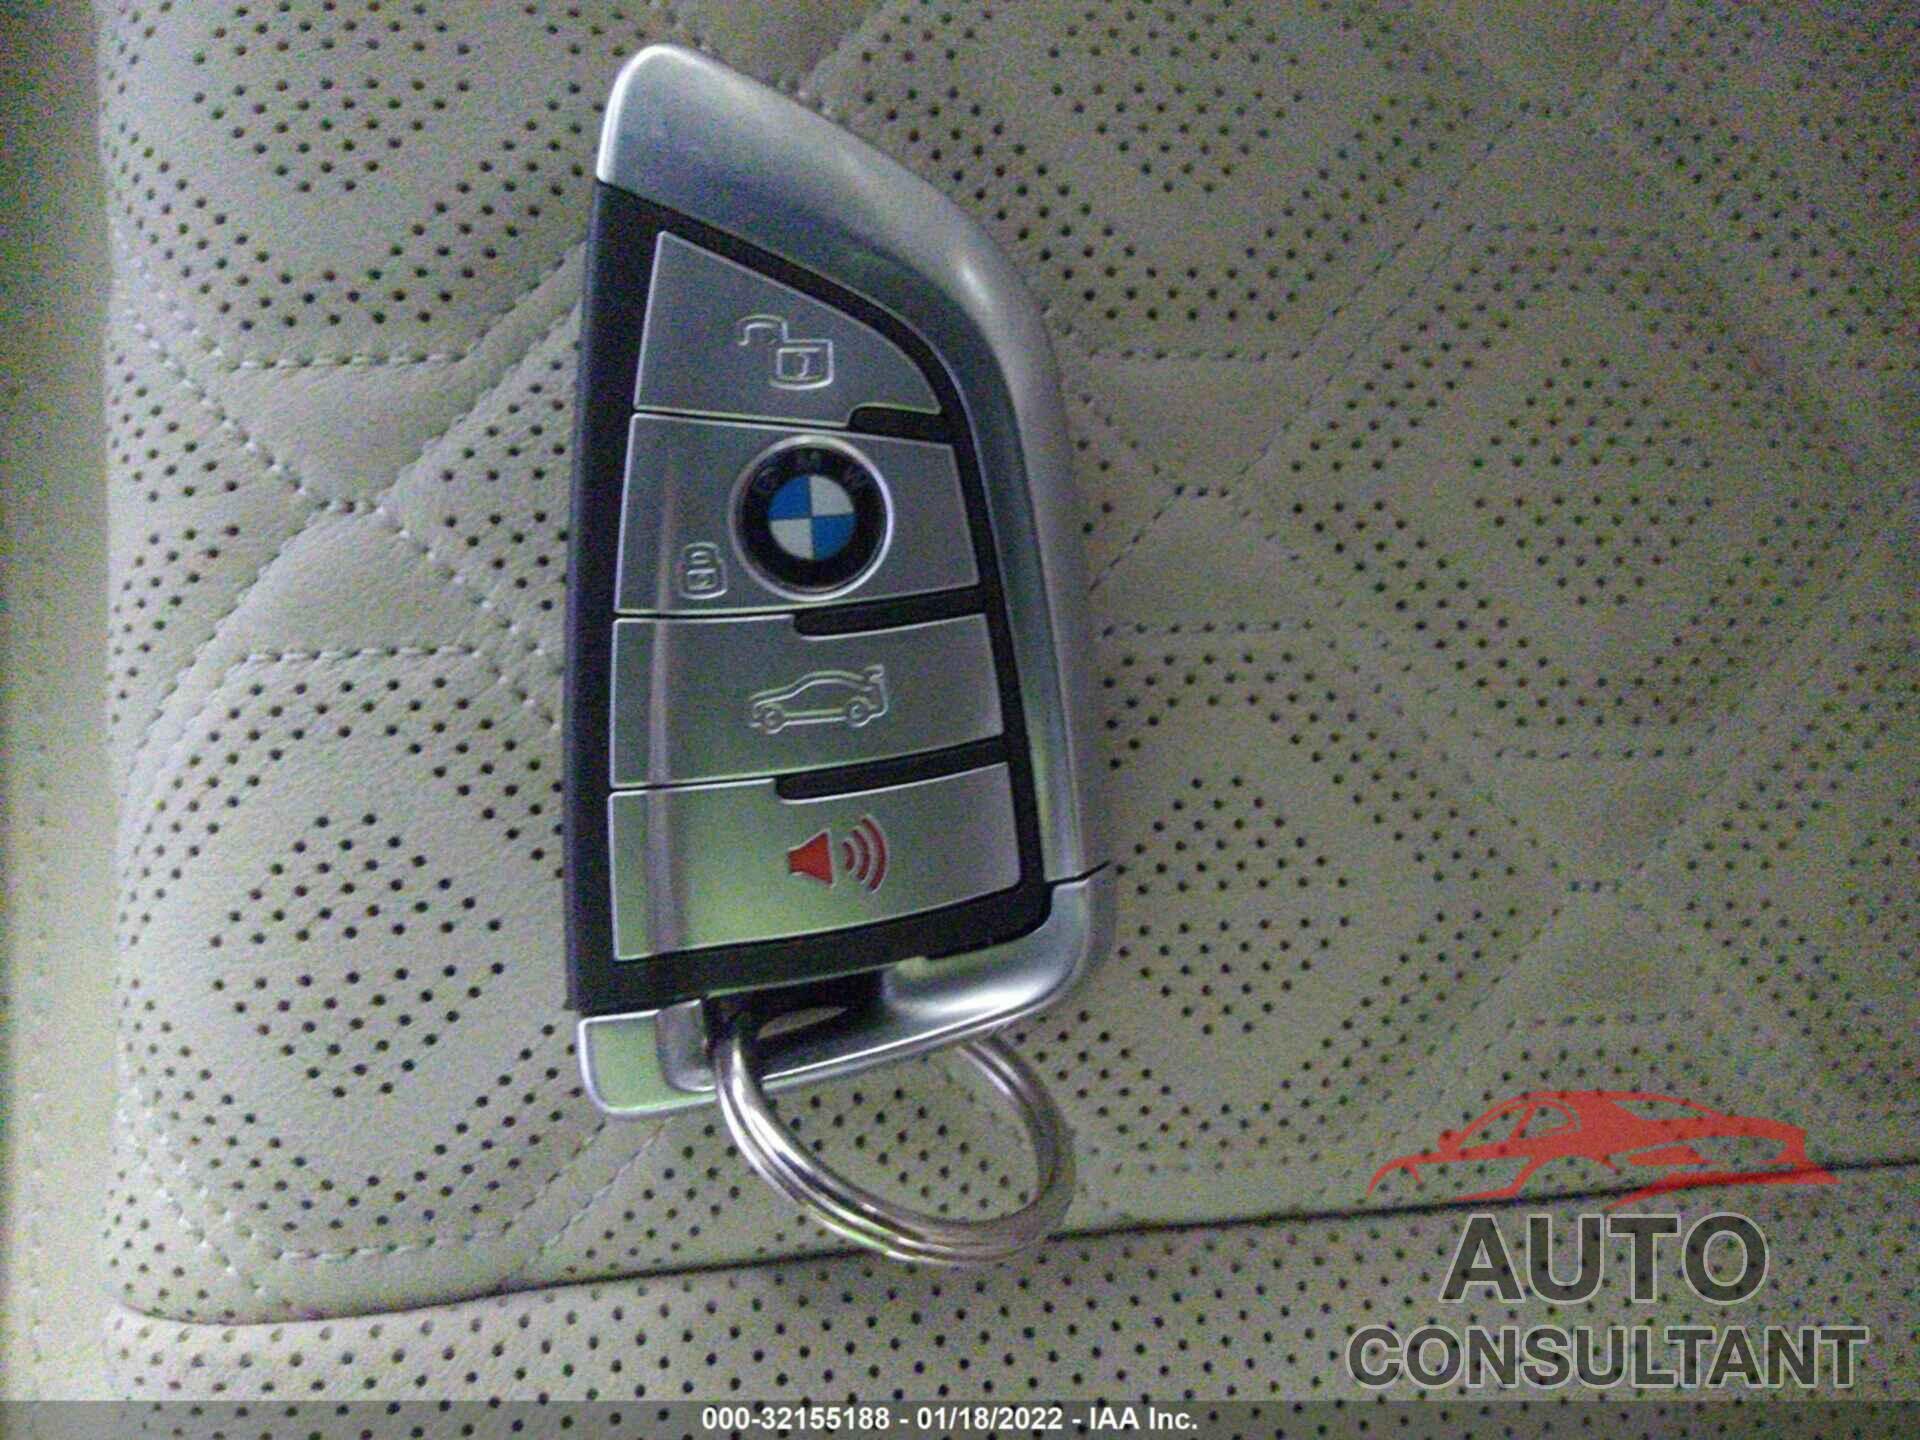 BMW M8 2022 - WBSGV0C0XNCJ03940